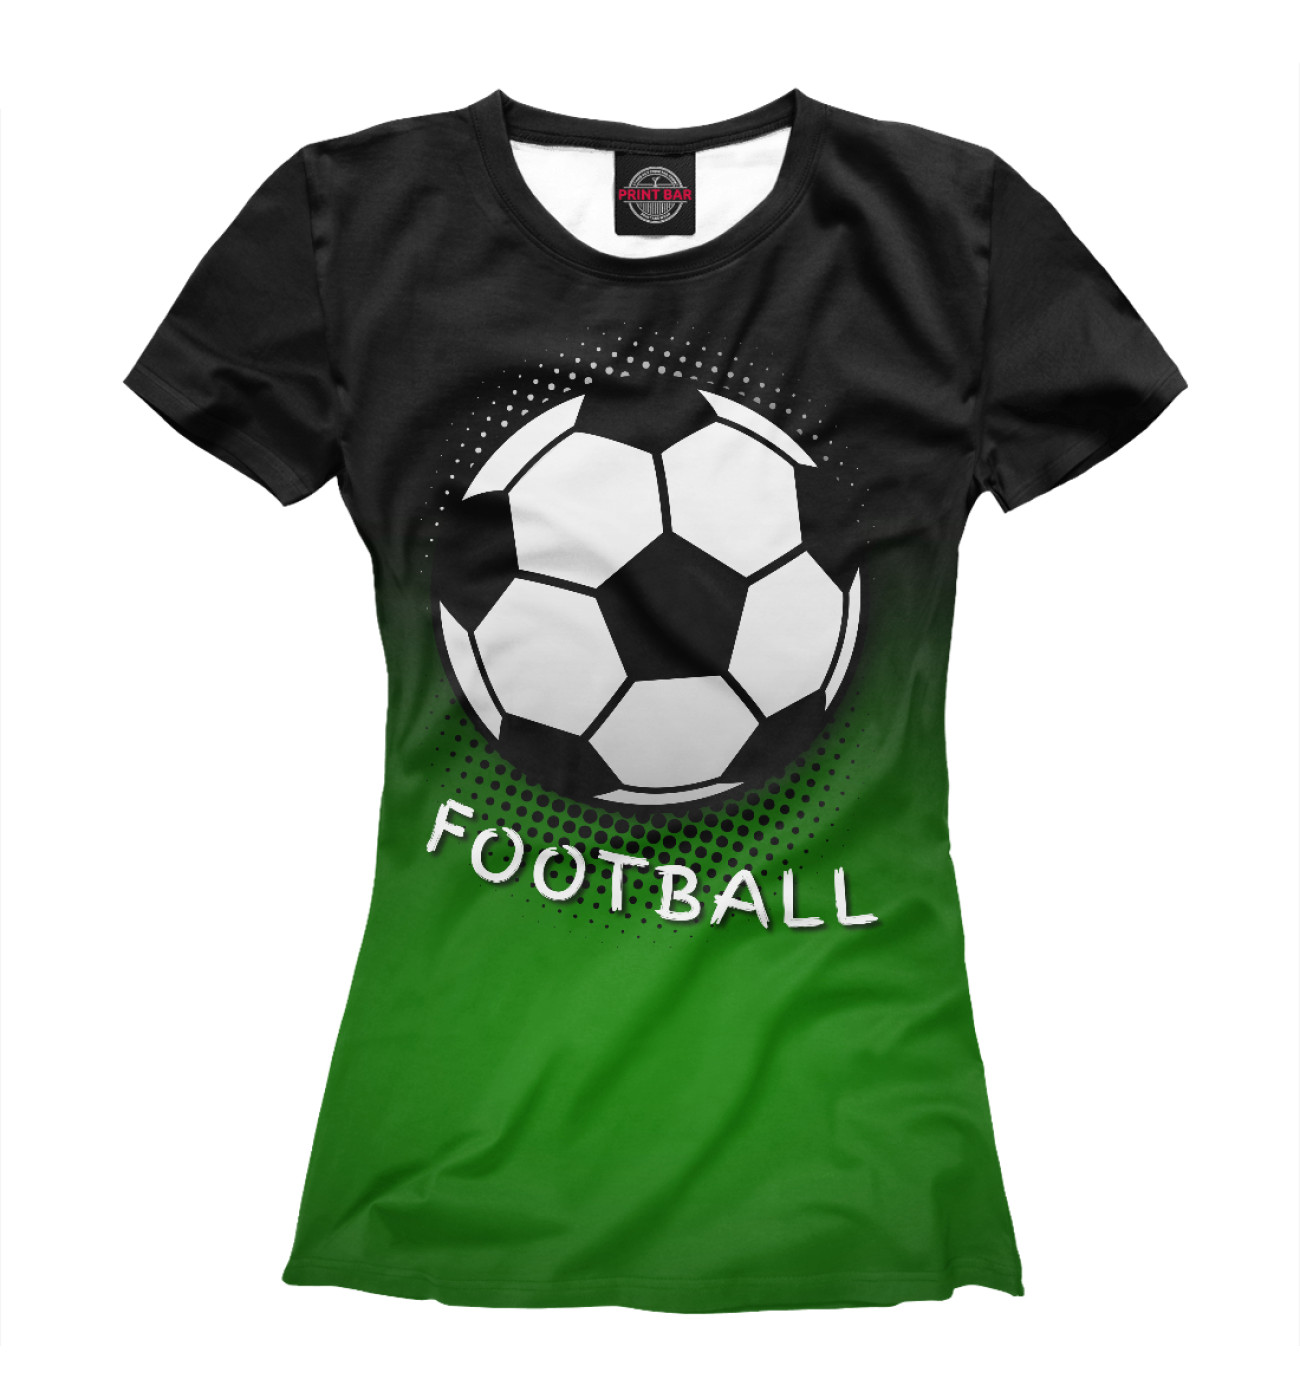 Женская Футболка Football, артикул: FTO-156000-fut-1